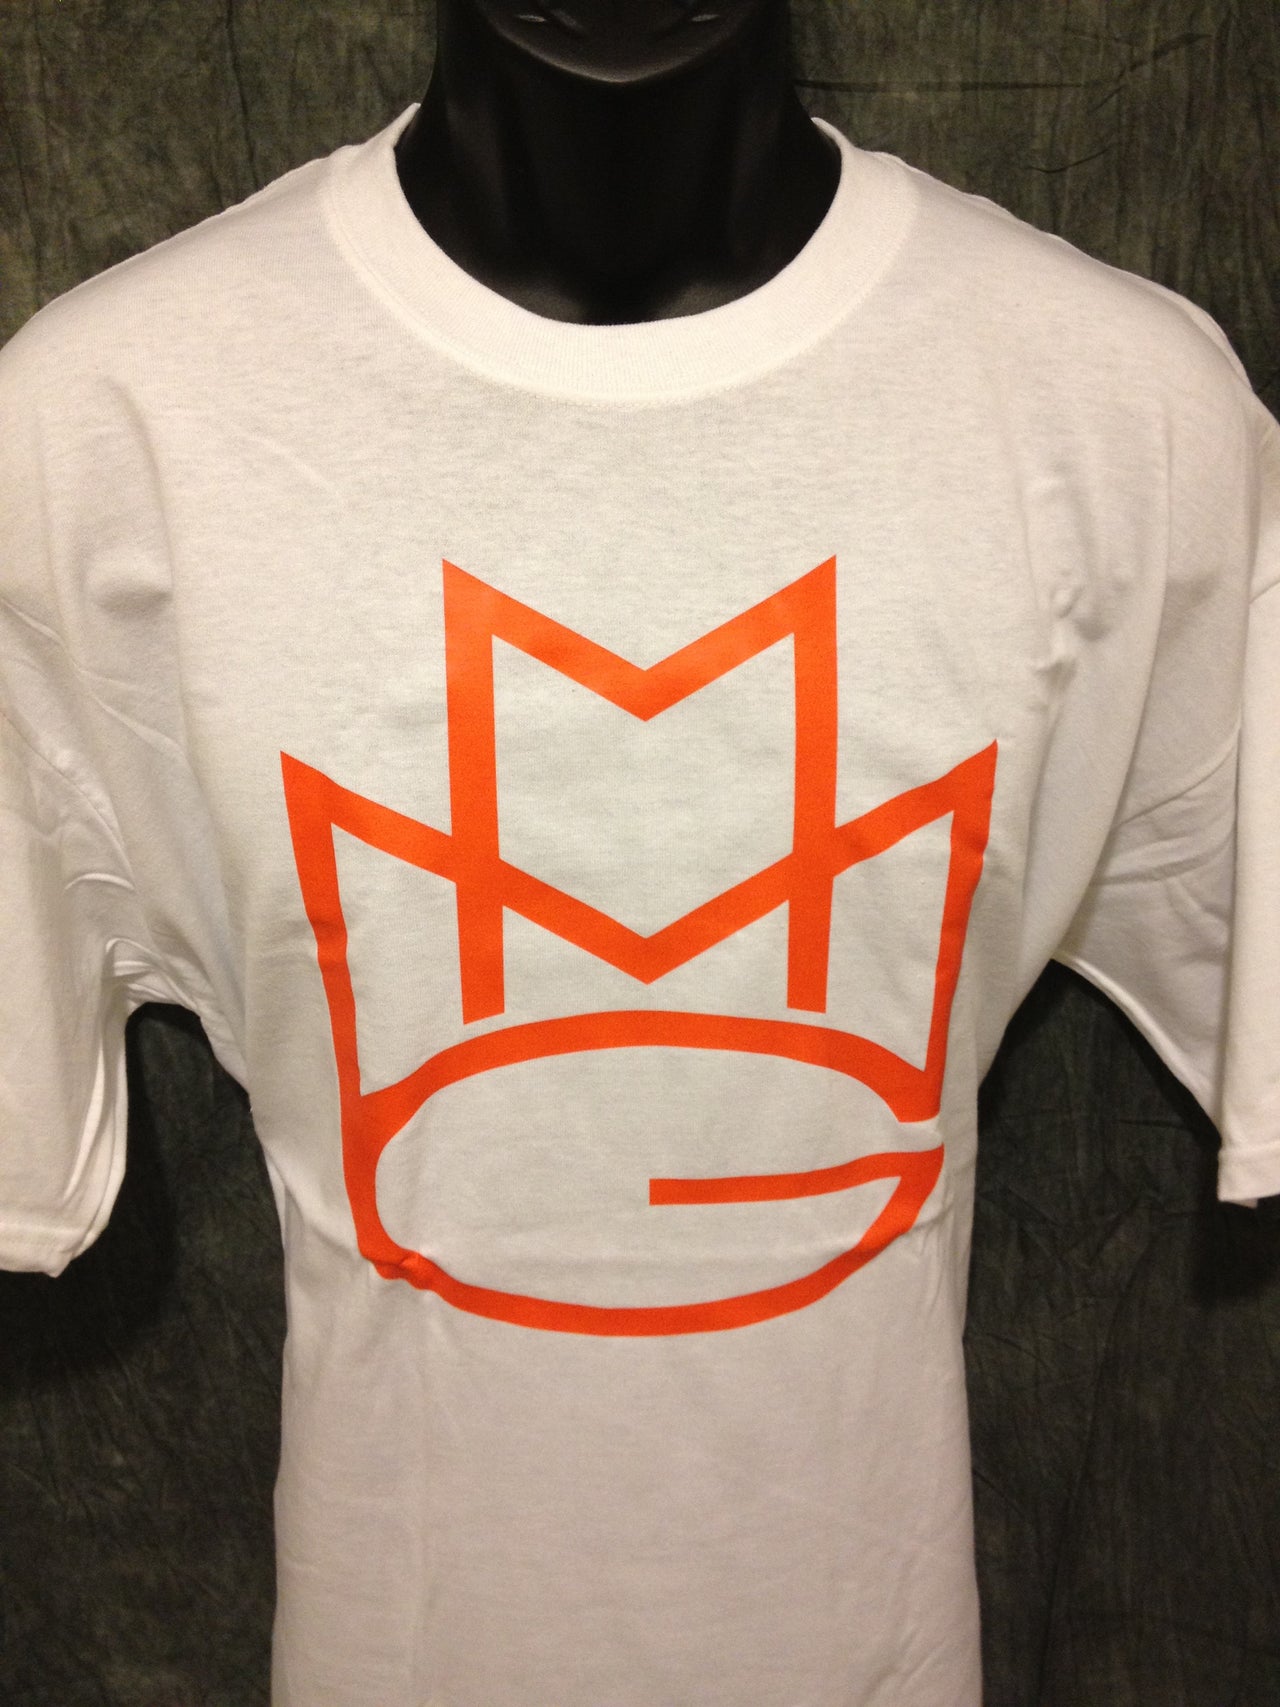 Maybach Music Group Tshirt: White with Orange Print - TshirtNow.net - 2